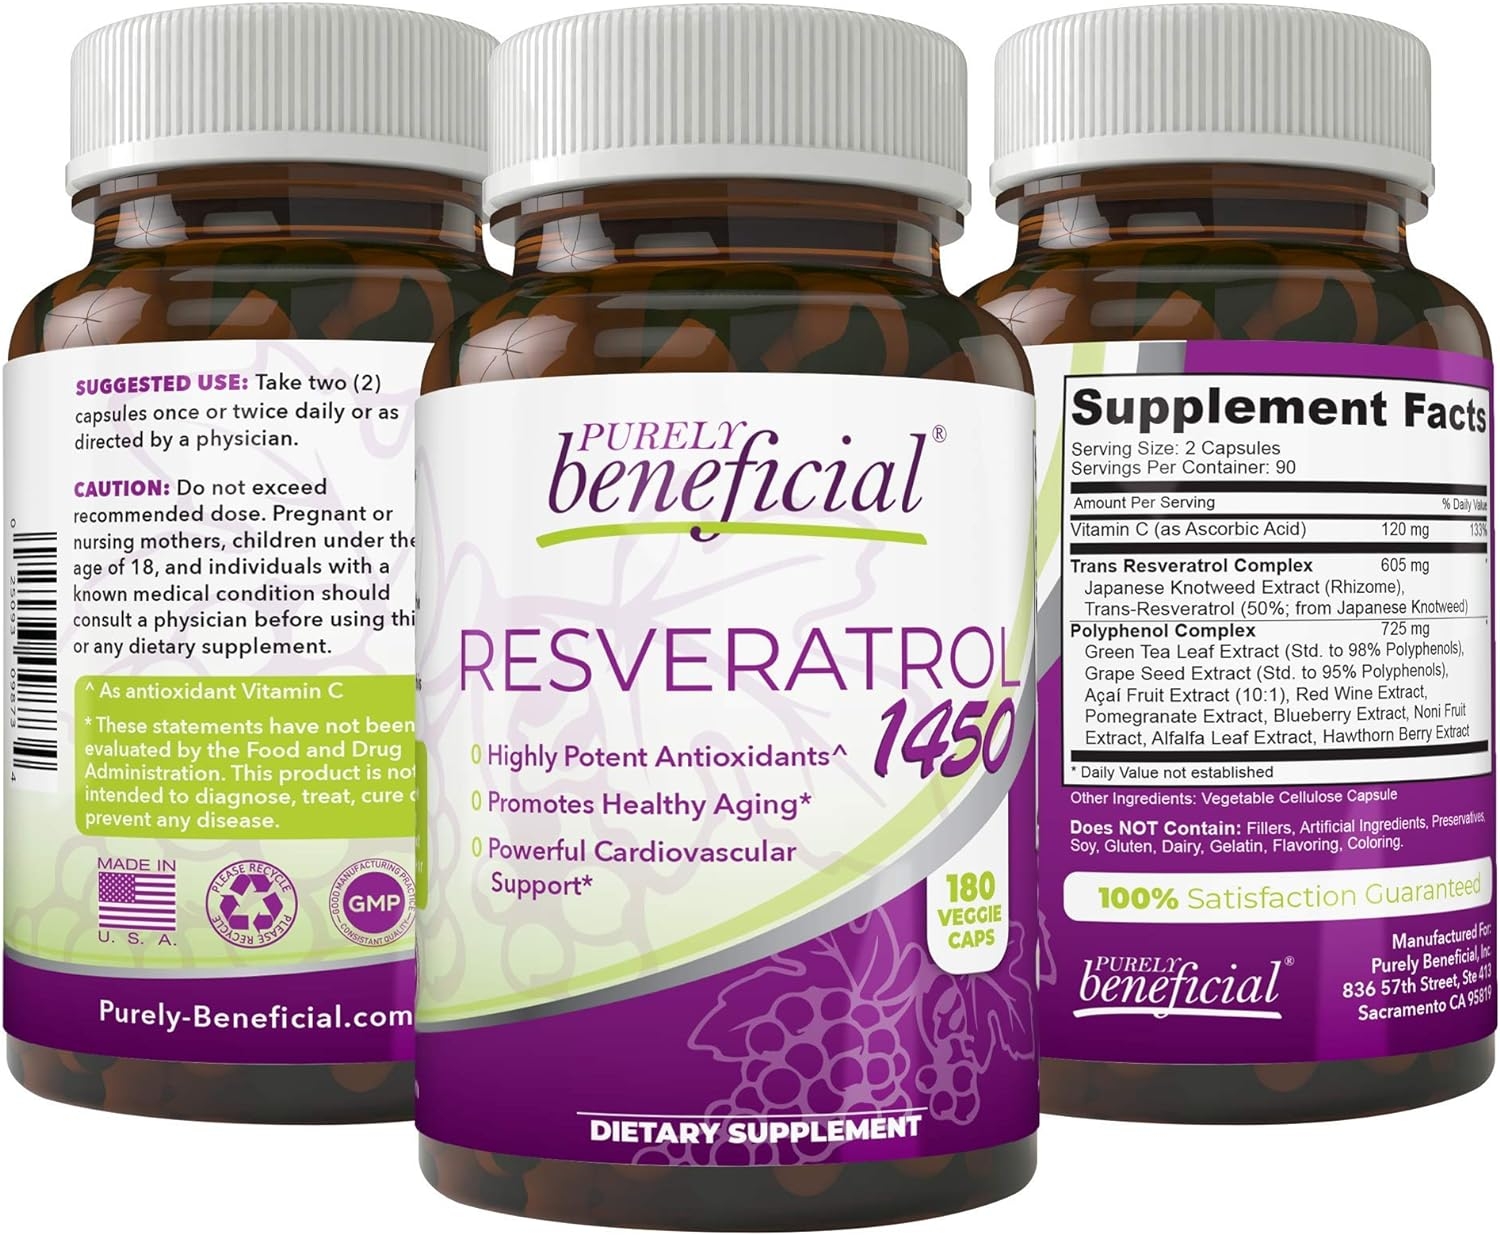 RESVERATROL1450 - 90day Supply, 1450mg per Serving of Potent Antioxidants & Trans-Resveratrol, Promotes Anti-Aging, Cardiovascular Support, Maximum Benefits (1bottle)